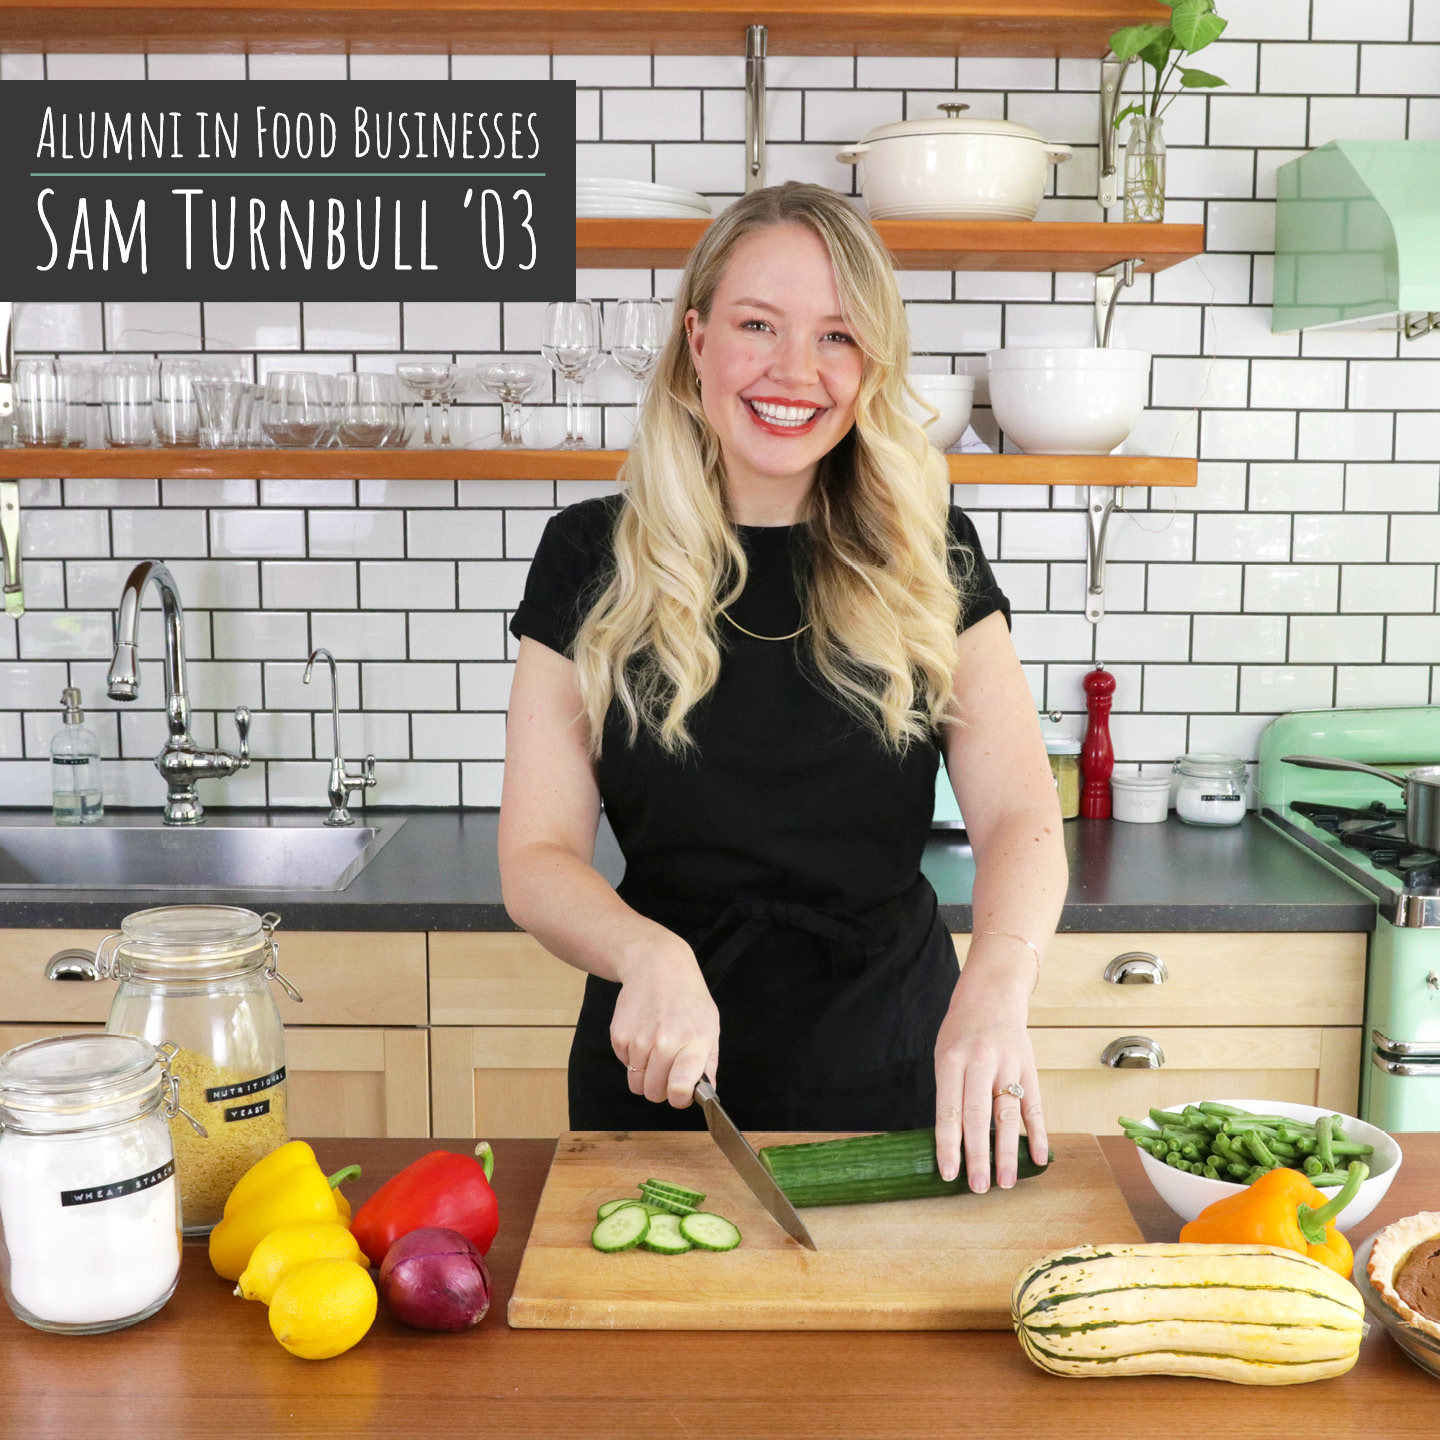 Sam Turnbull ’03 | Vegan Brand Builder (Alumni in Food Businesses)